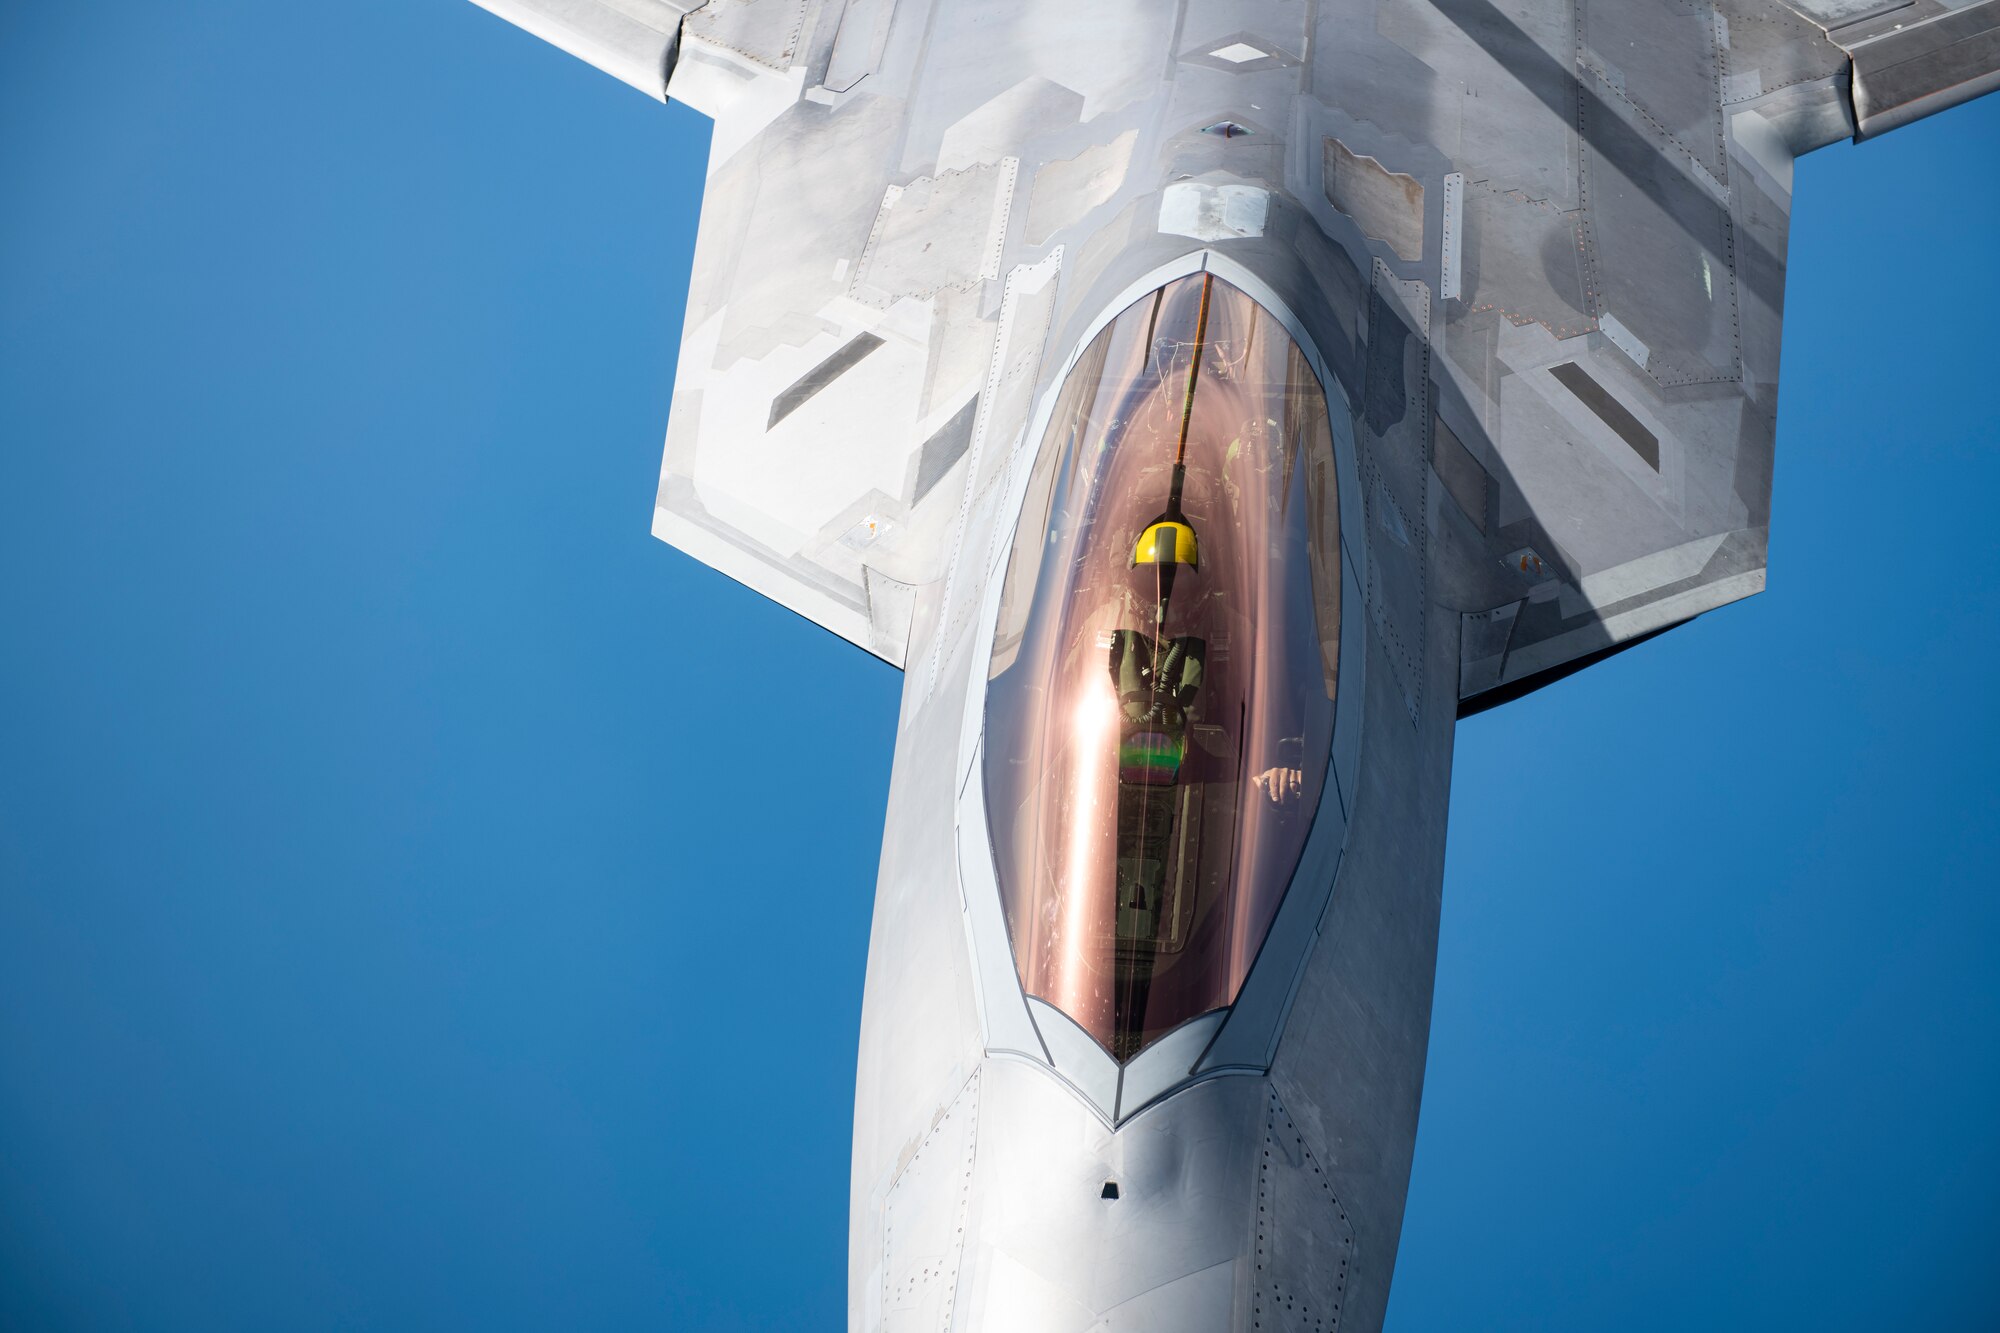 F-22 aerial refueling